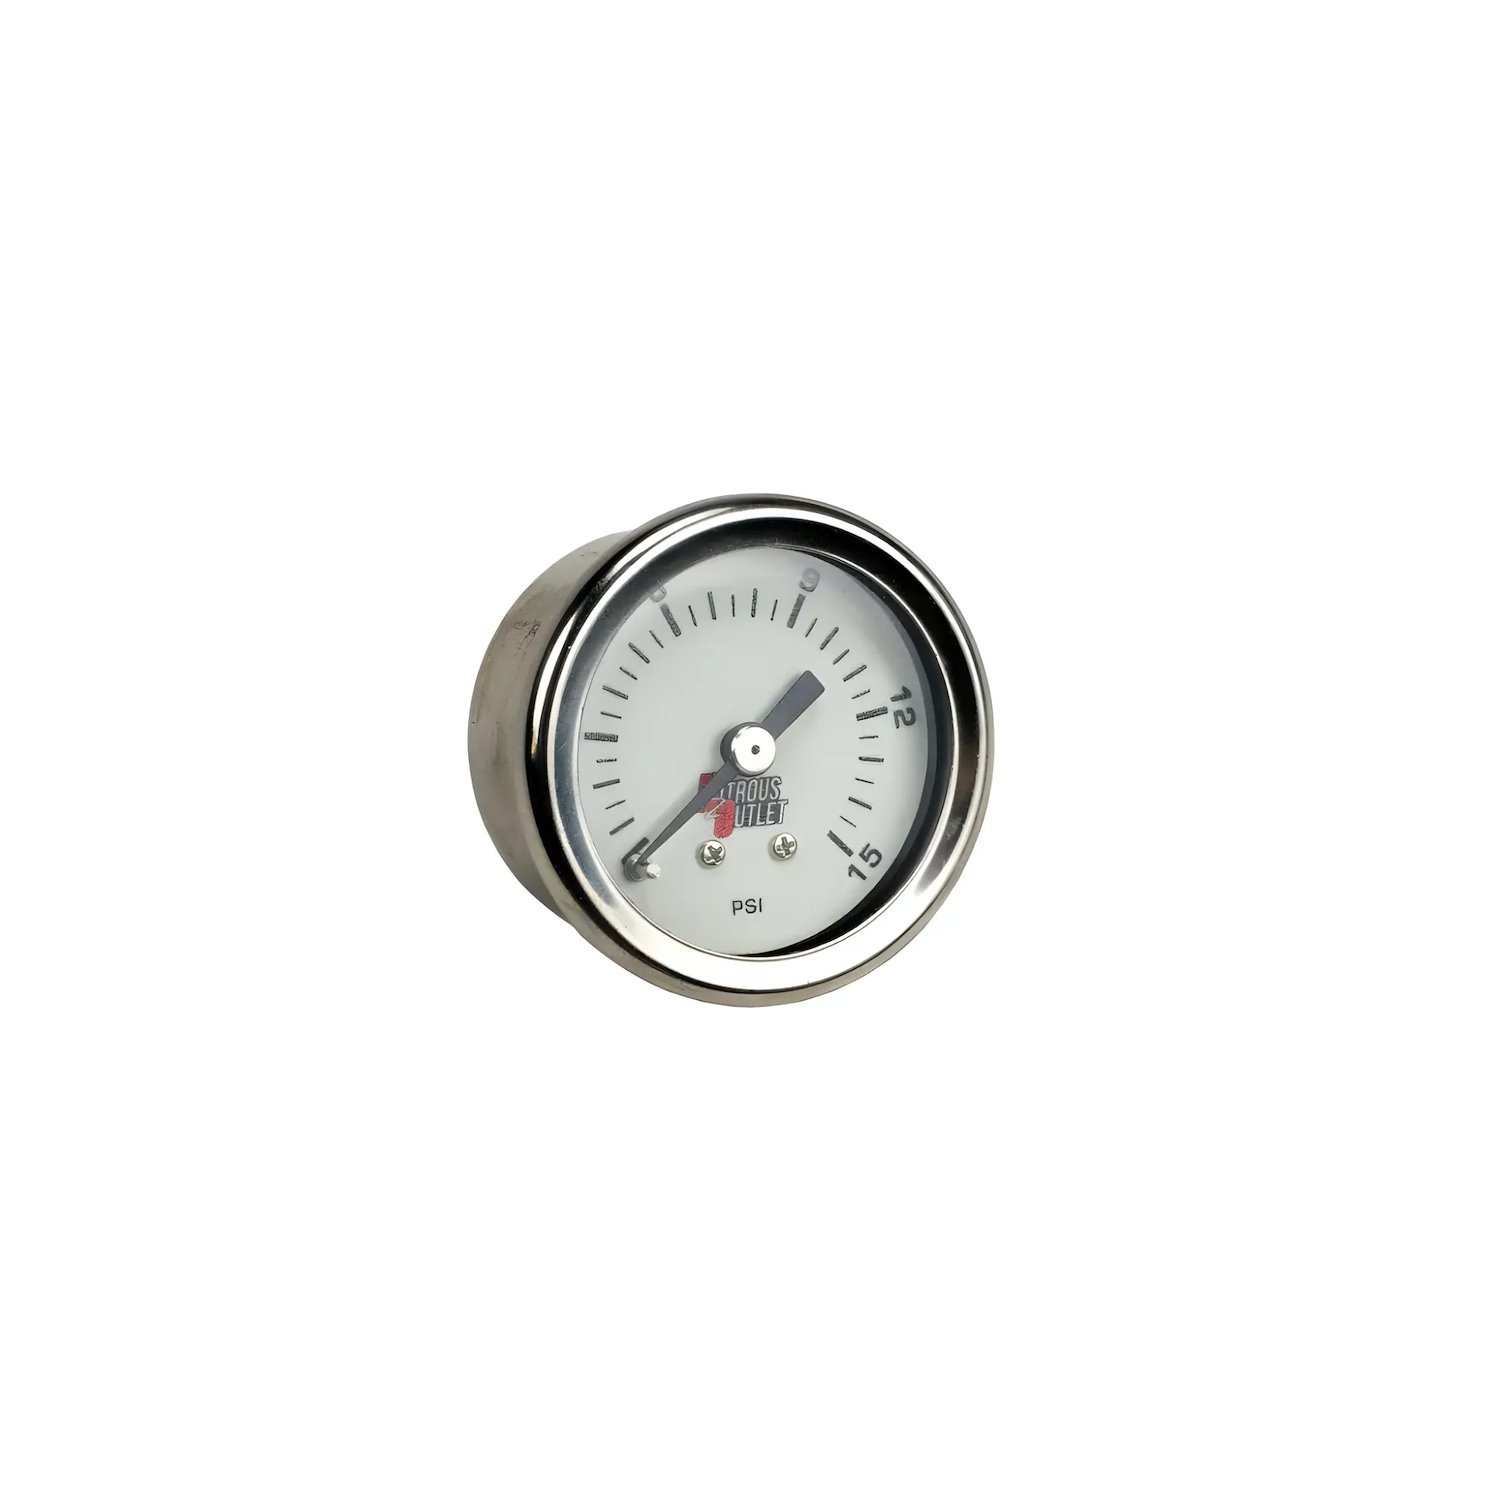 00-63003-6 Fuel Pressure Gauge, 6AN Manifold, 0-15 psi